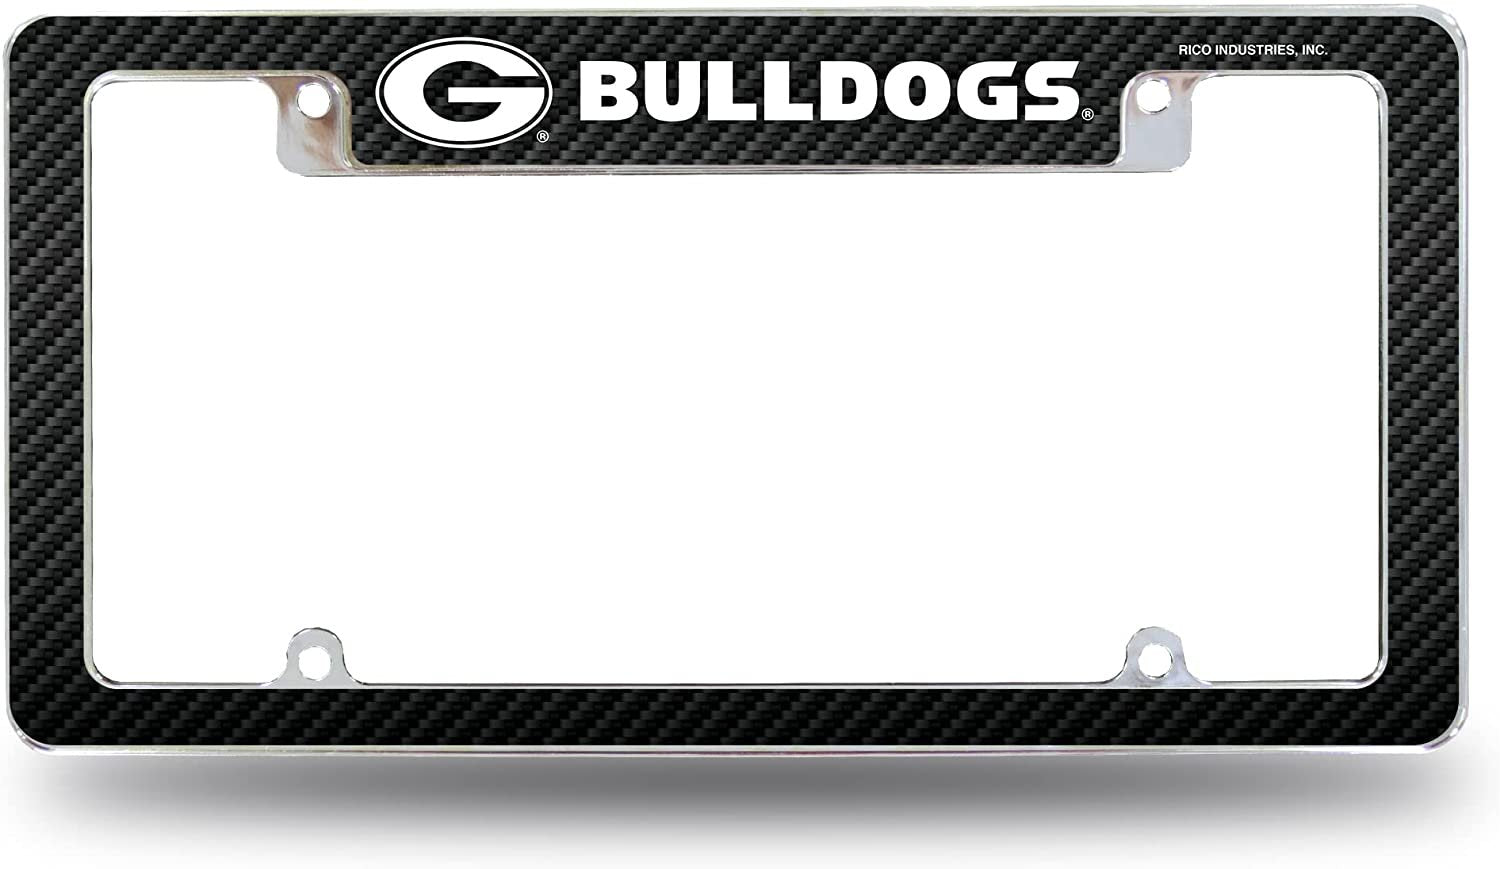 Georgia Bulldogs Metal License Plate Frame Tag Cover Carbon Fiber Design 12x6 Inch